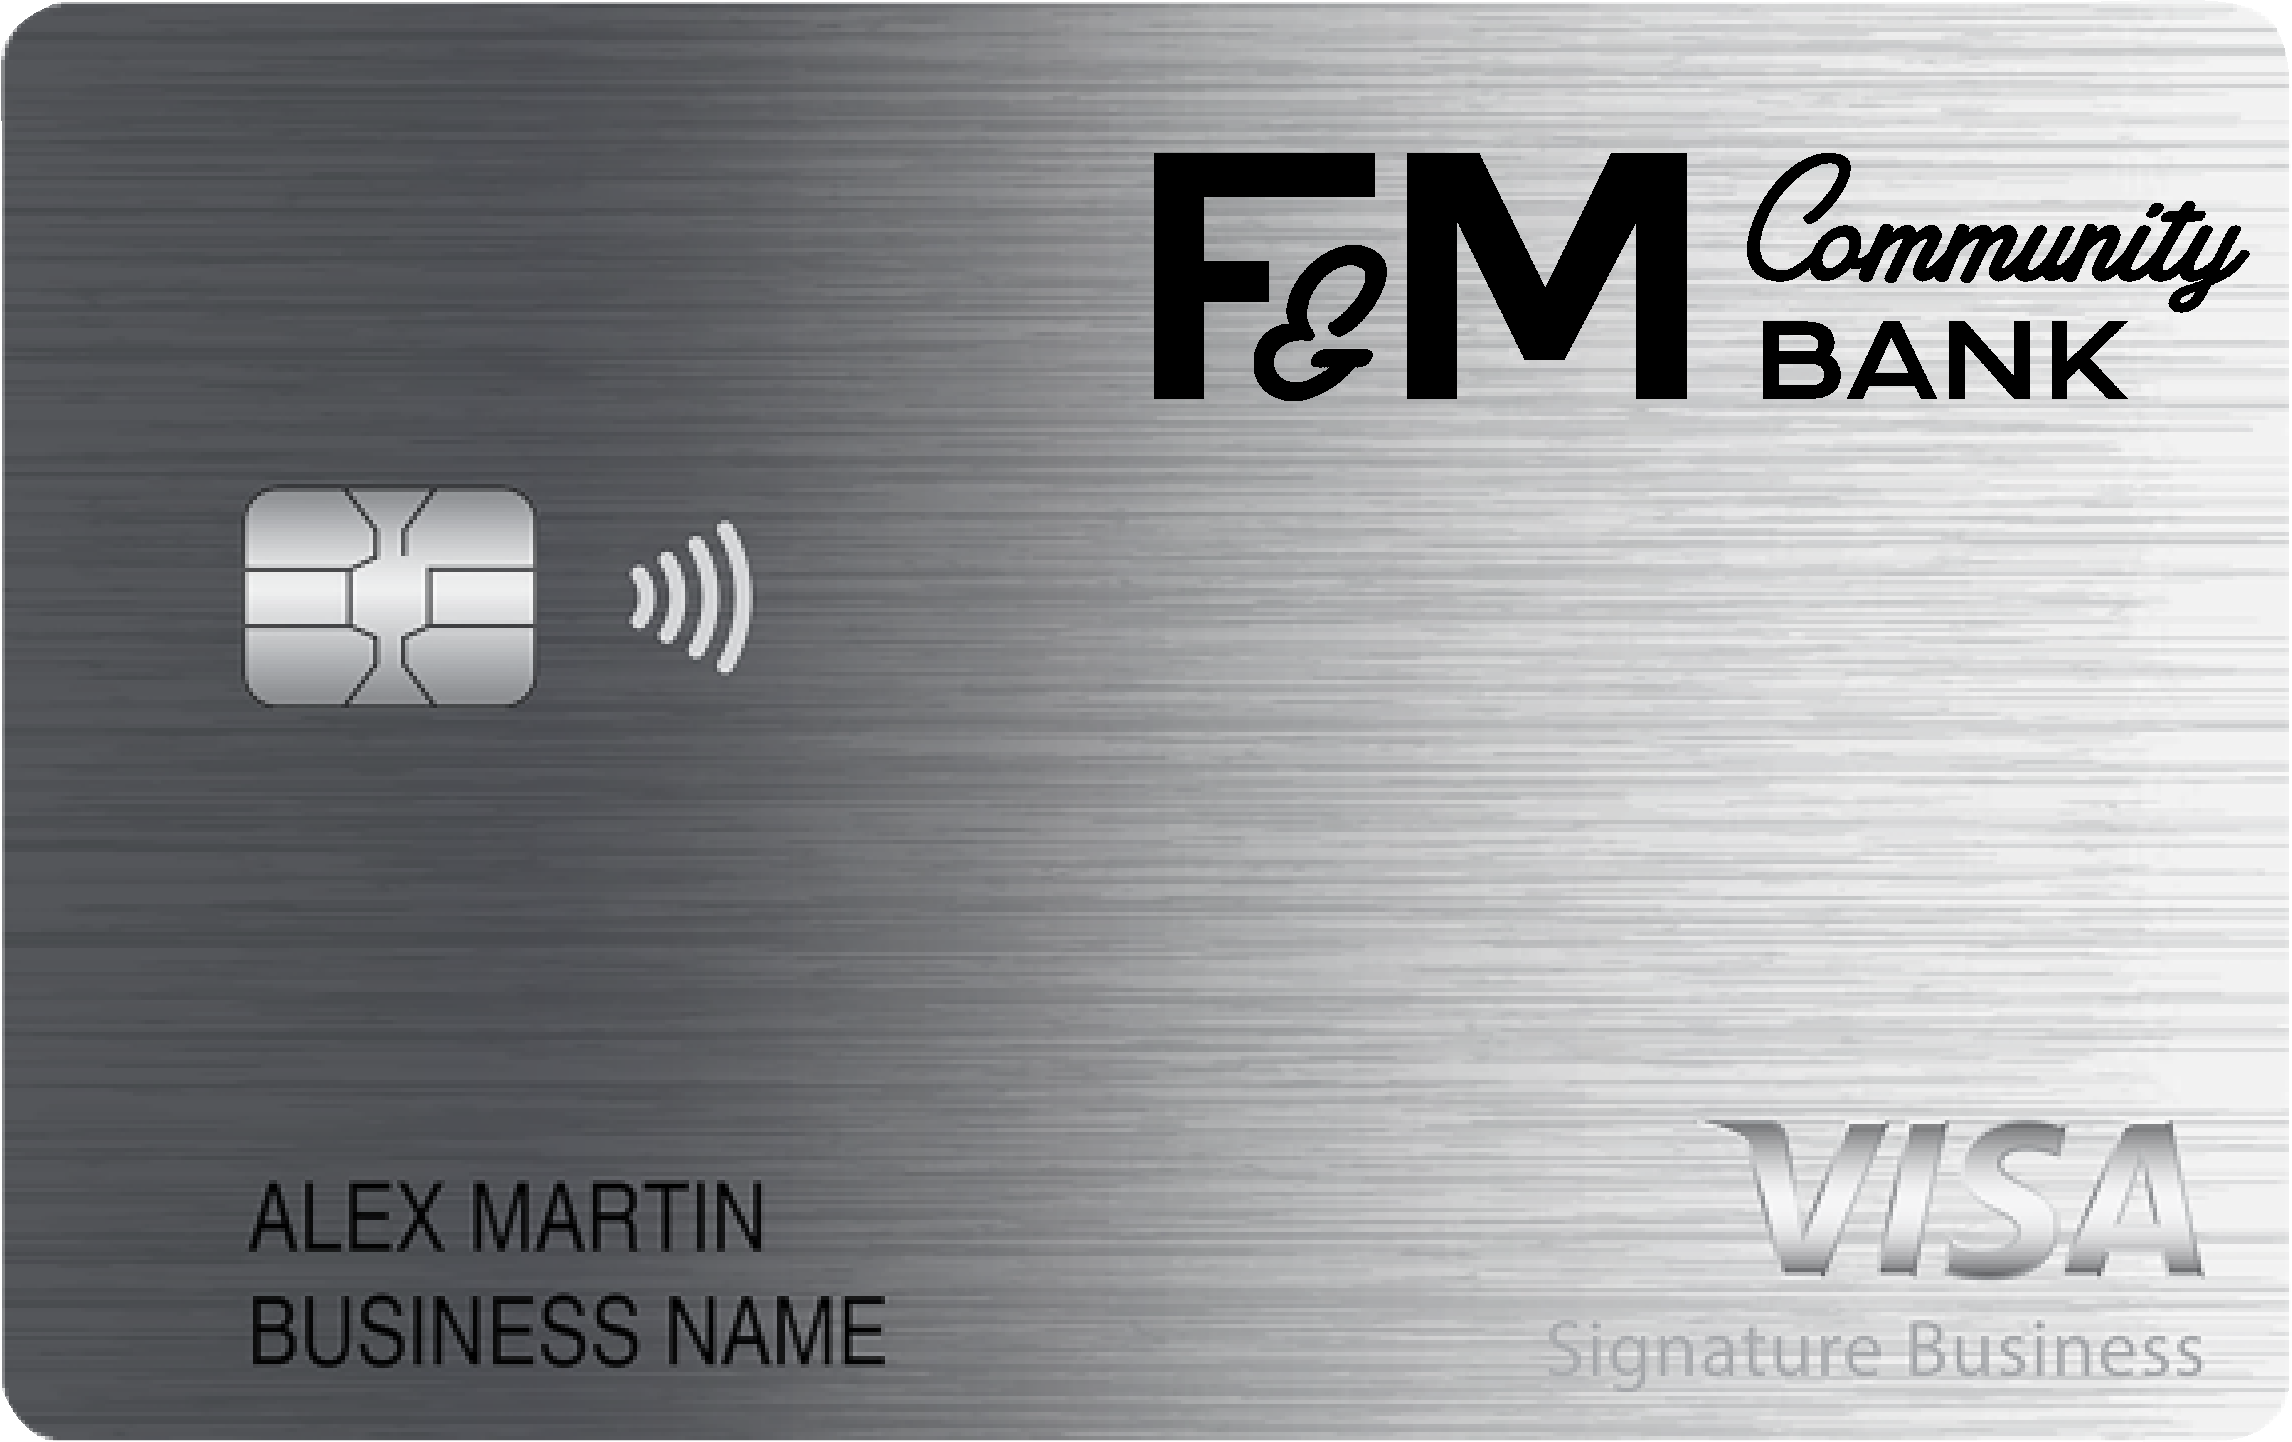 F & M Community Bank Smart Business Rewards Card